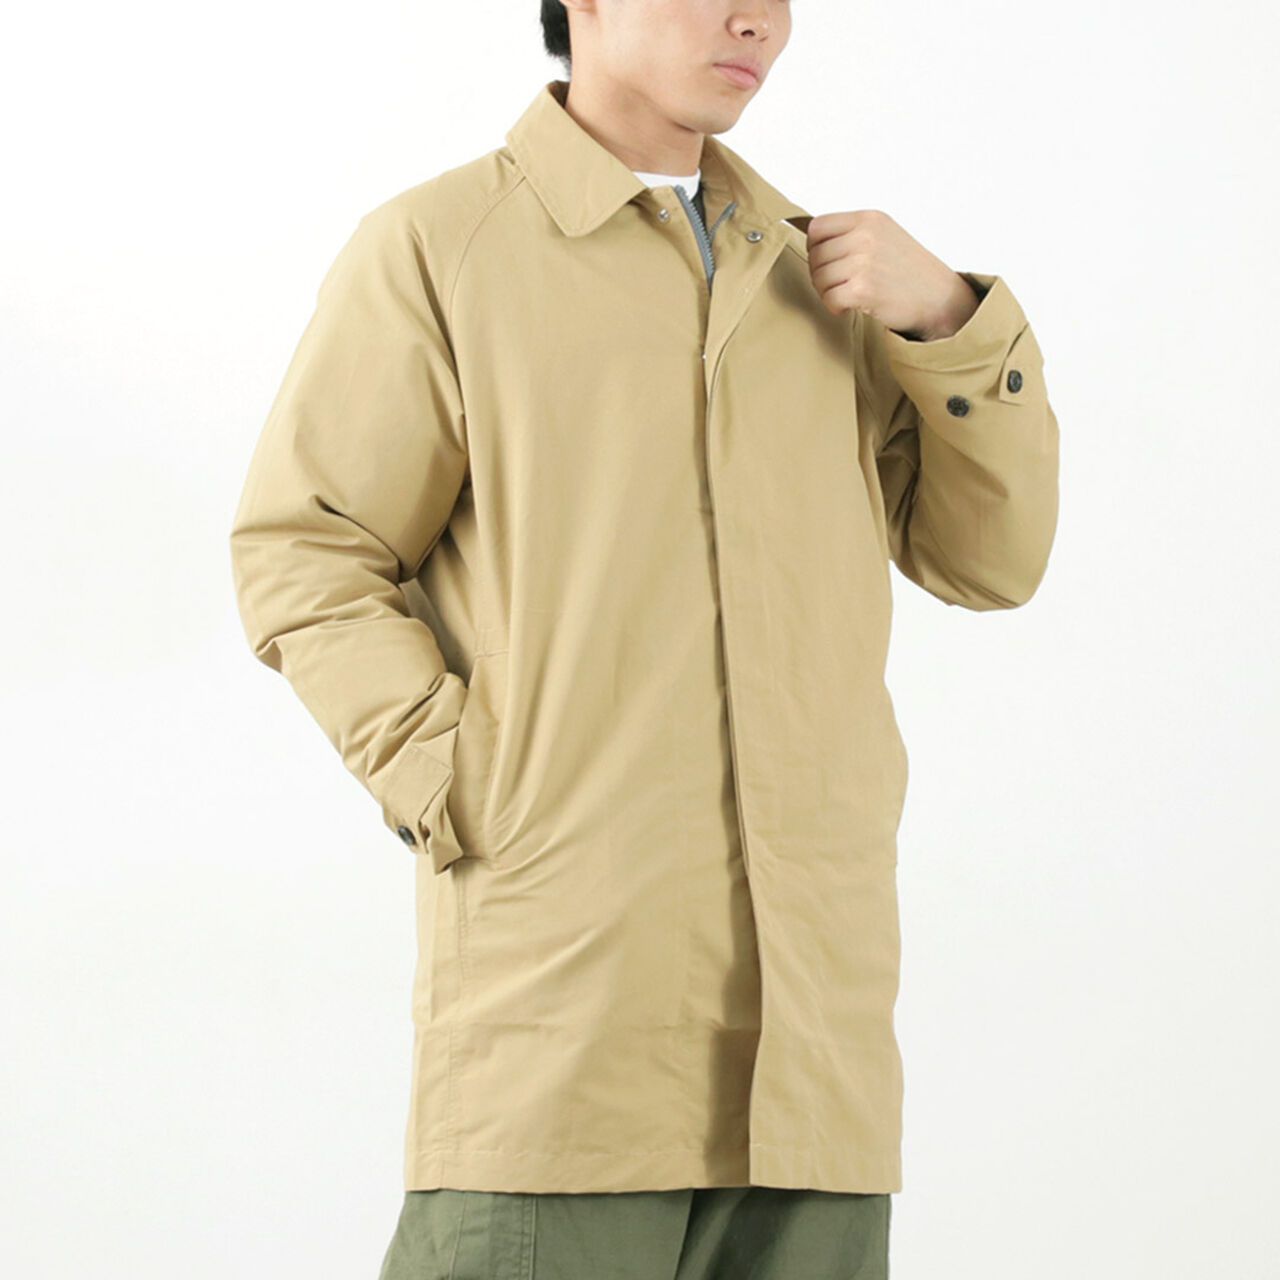 Tacoma Coat,Tan, large image number 0